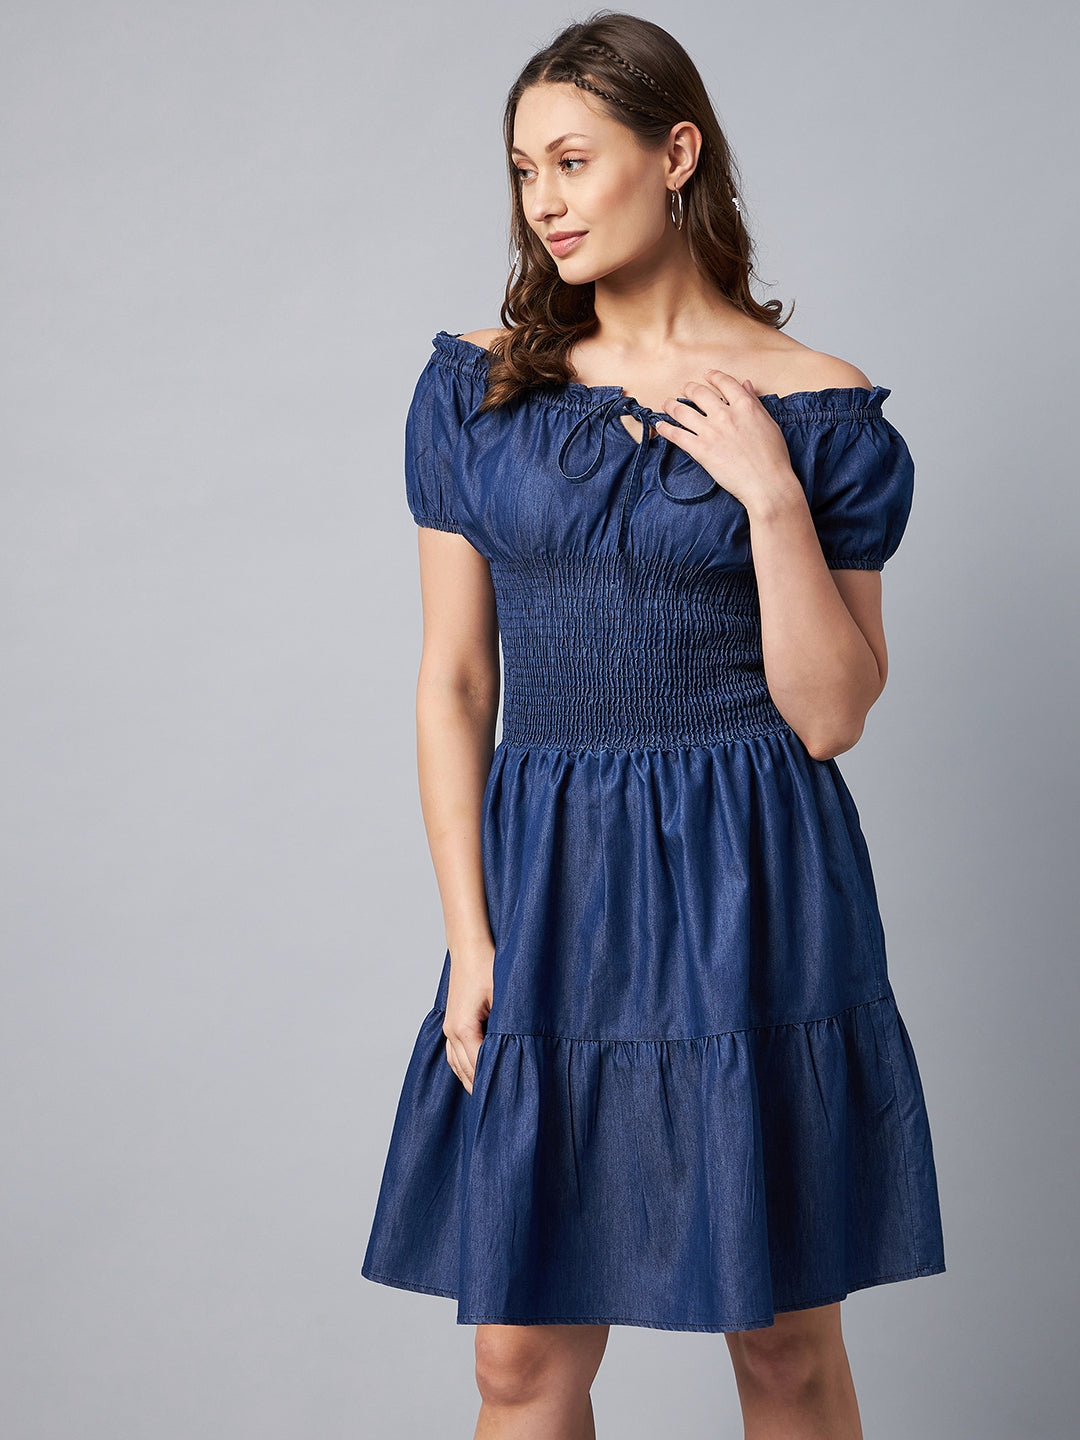 Blue-Denim-Peasant-Style-Smocked-Waist-Dress